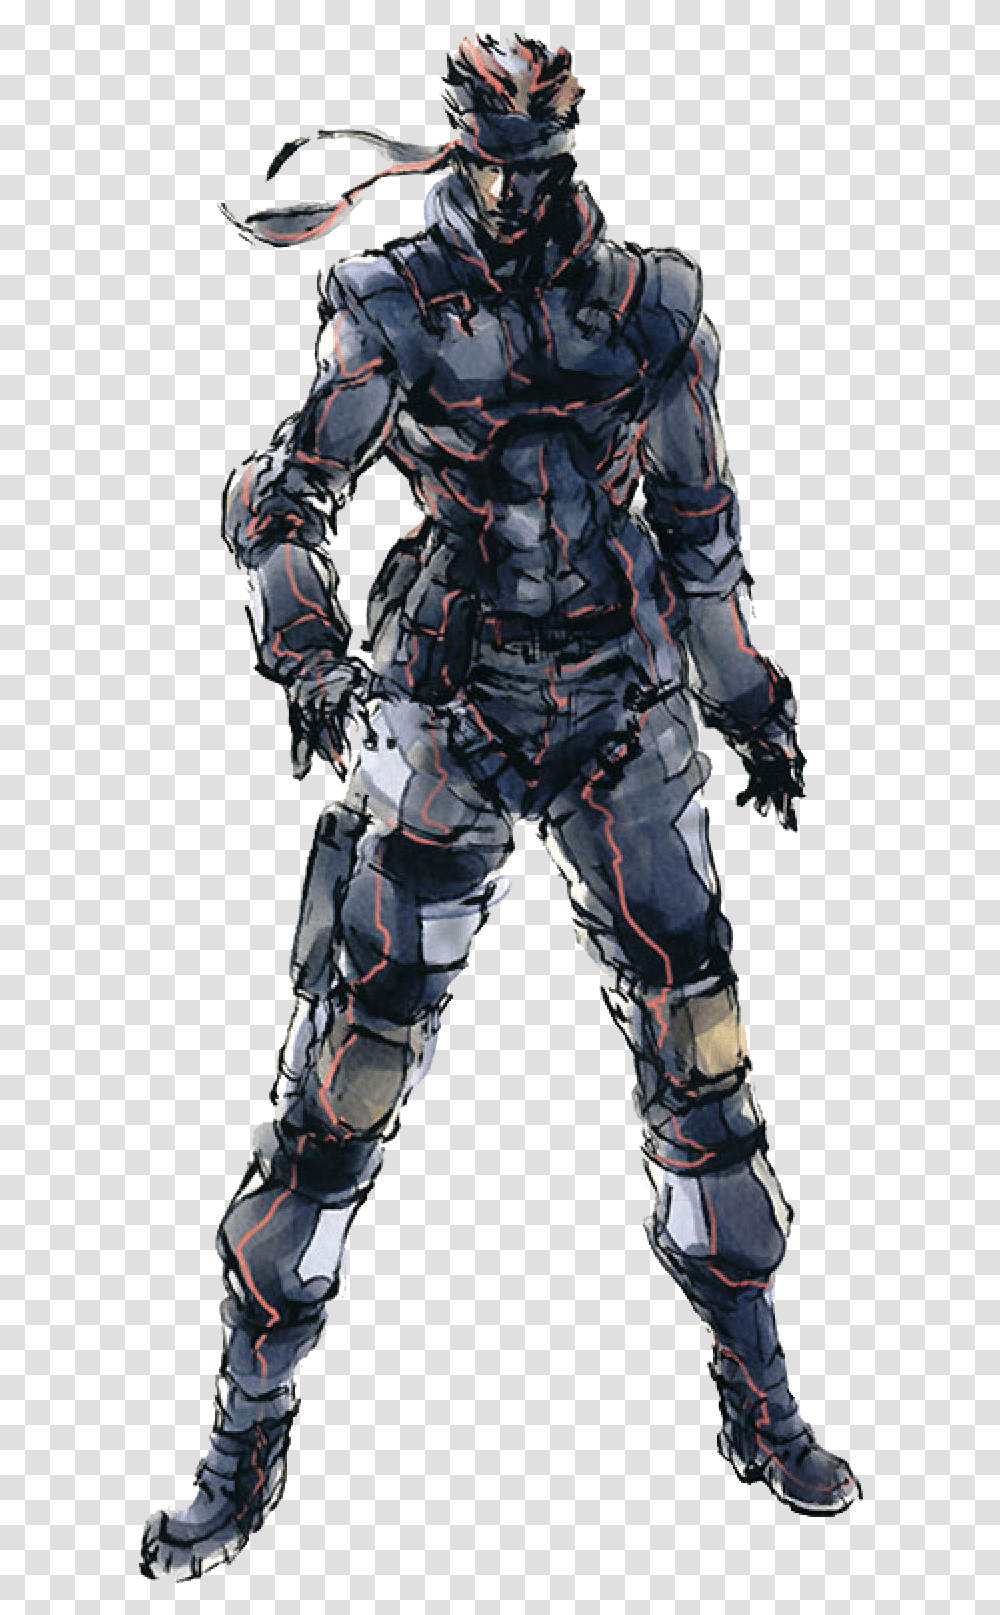 Solid Snake Yoji Shinkawa Solid Snake, Person, Human, Armor Transparent Png